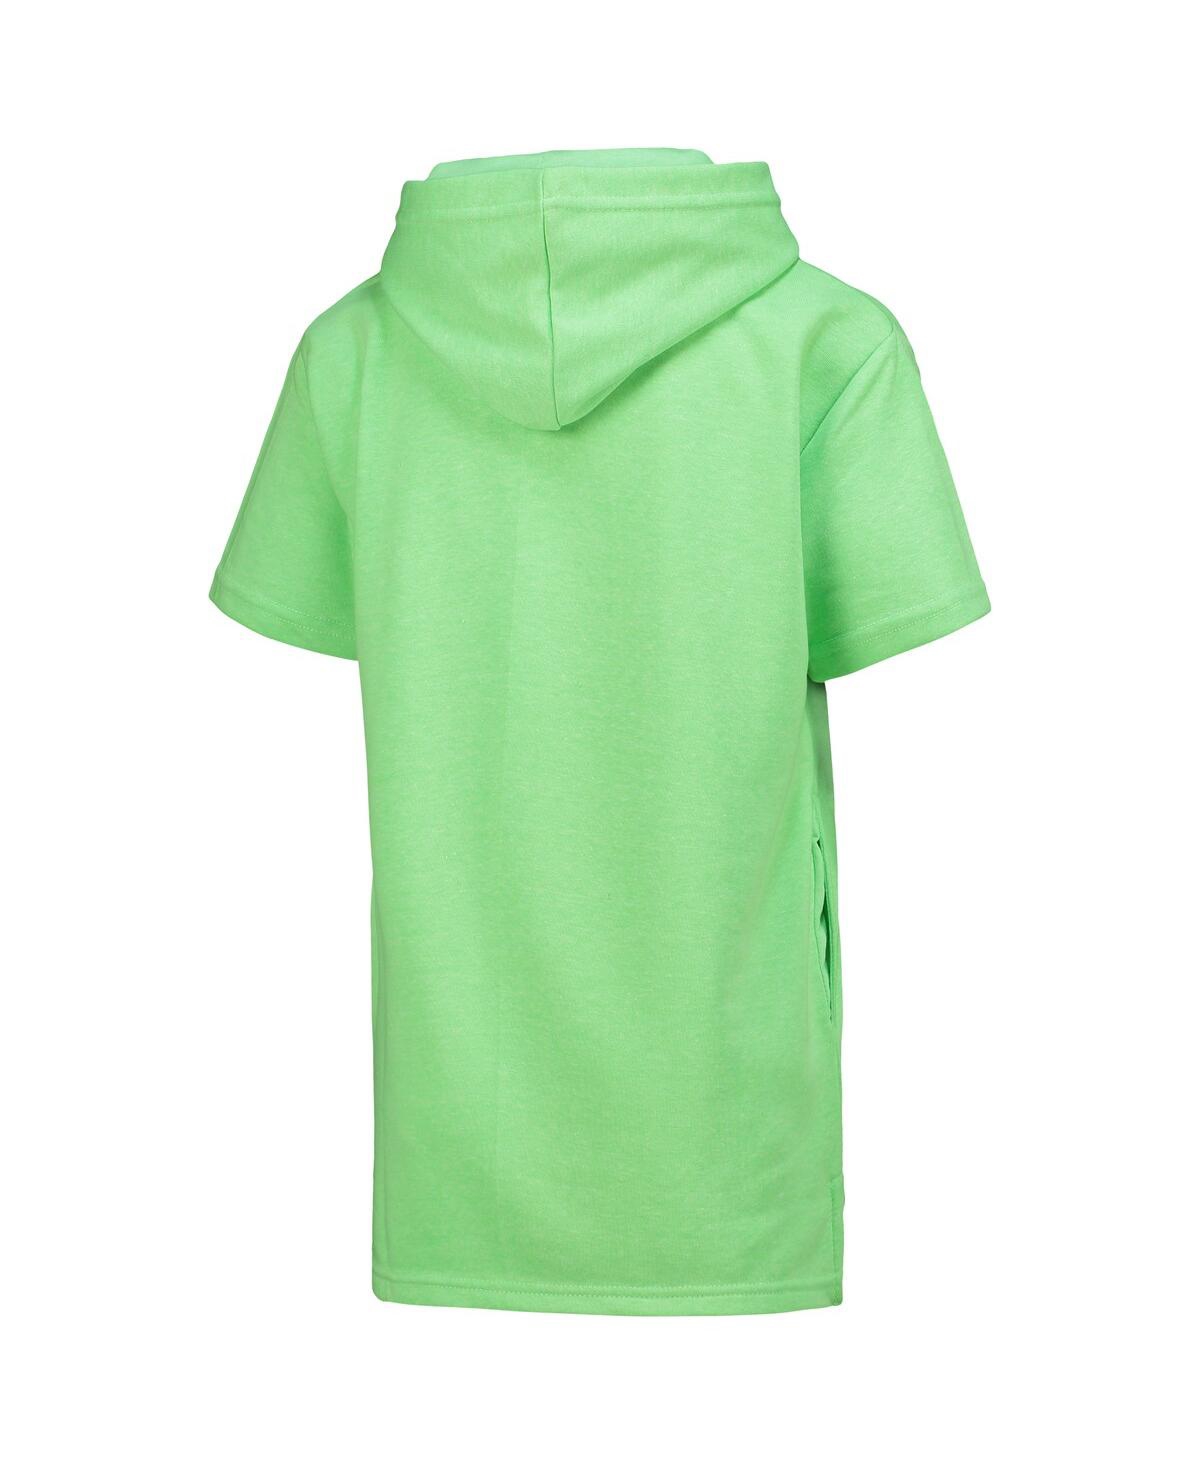 Shop Outerstuff Big Boys Green Miami Hurricanes Game On Neon Daze Hoodie T-shirt